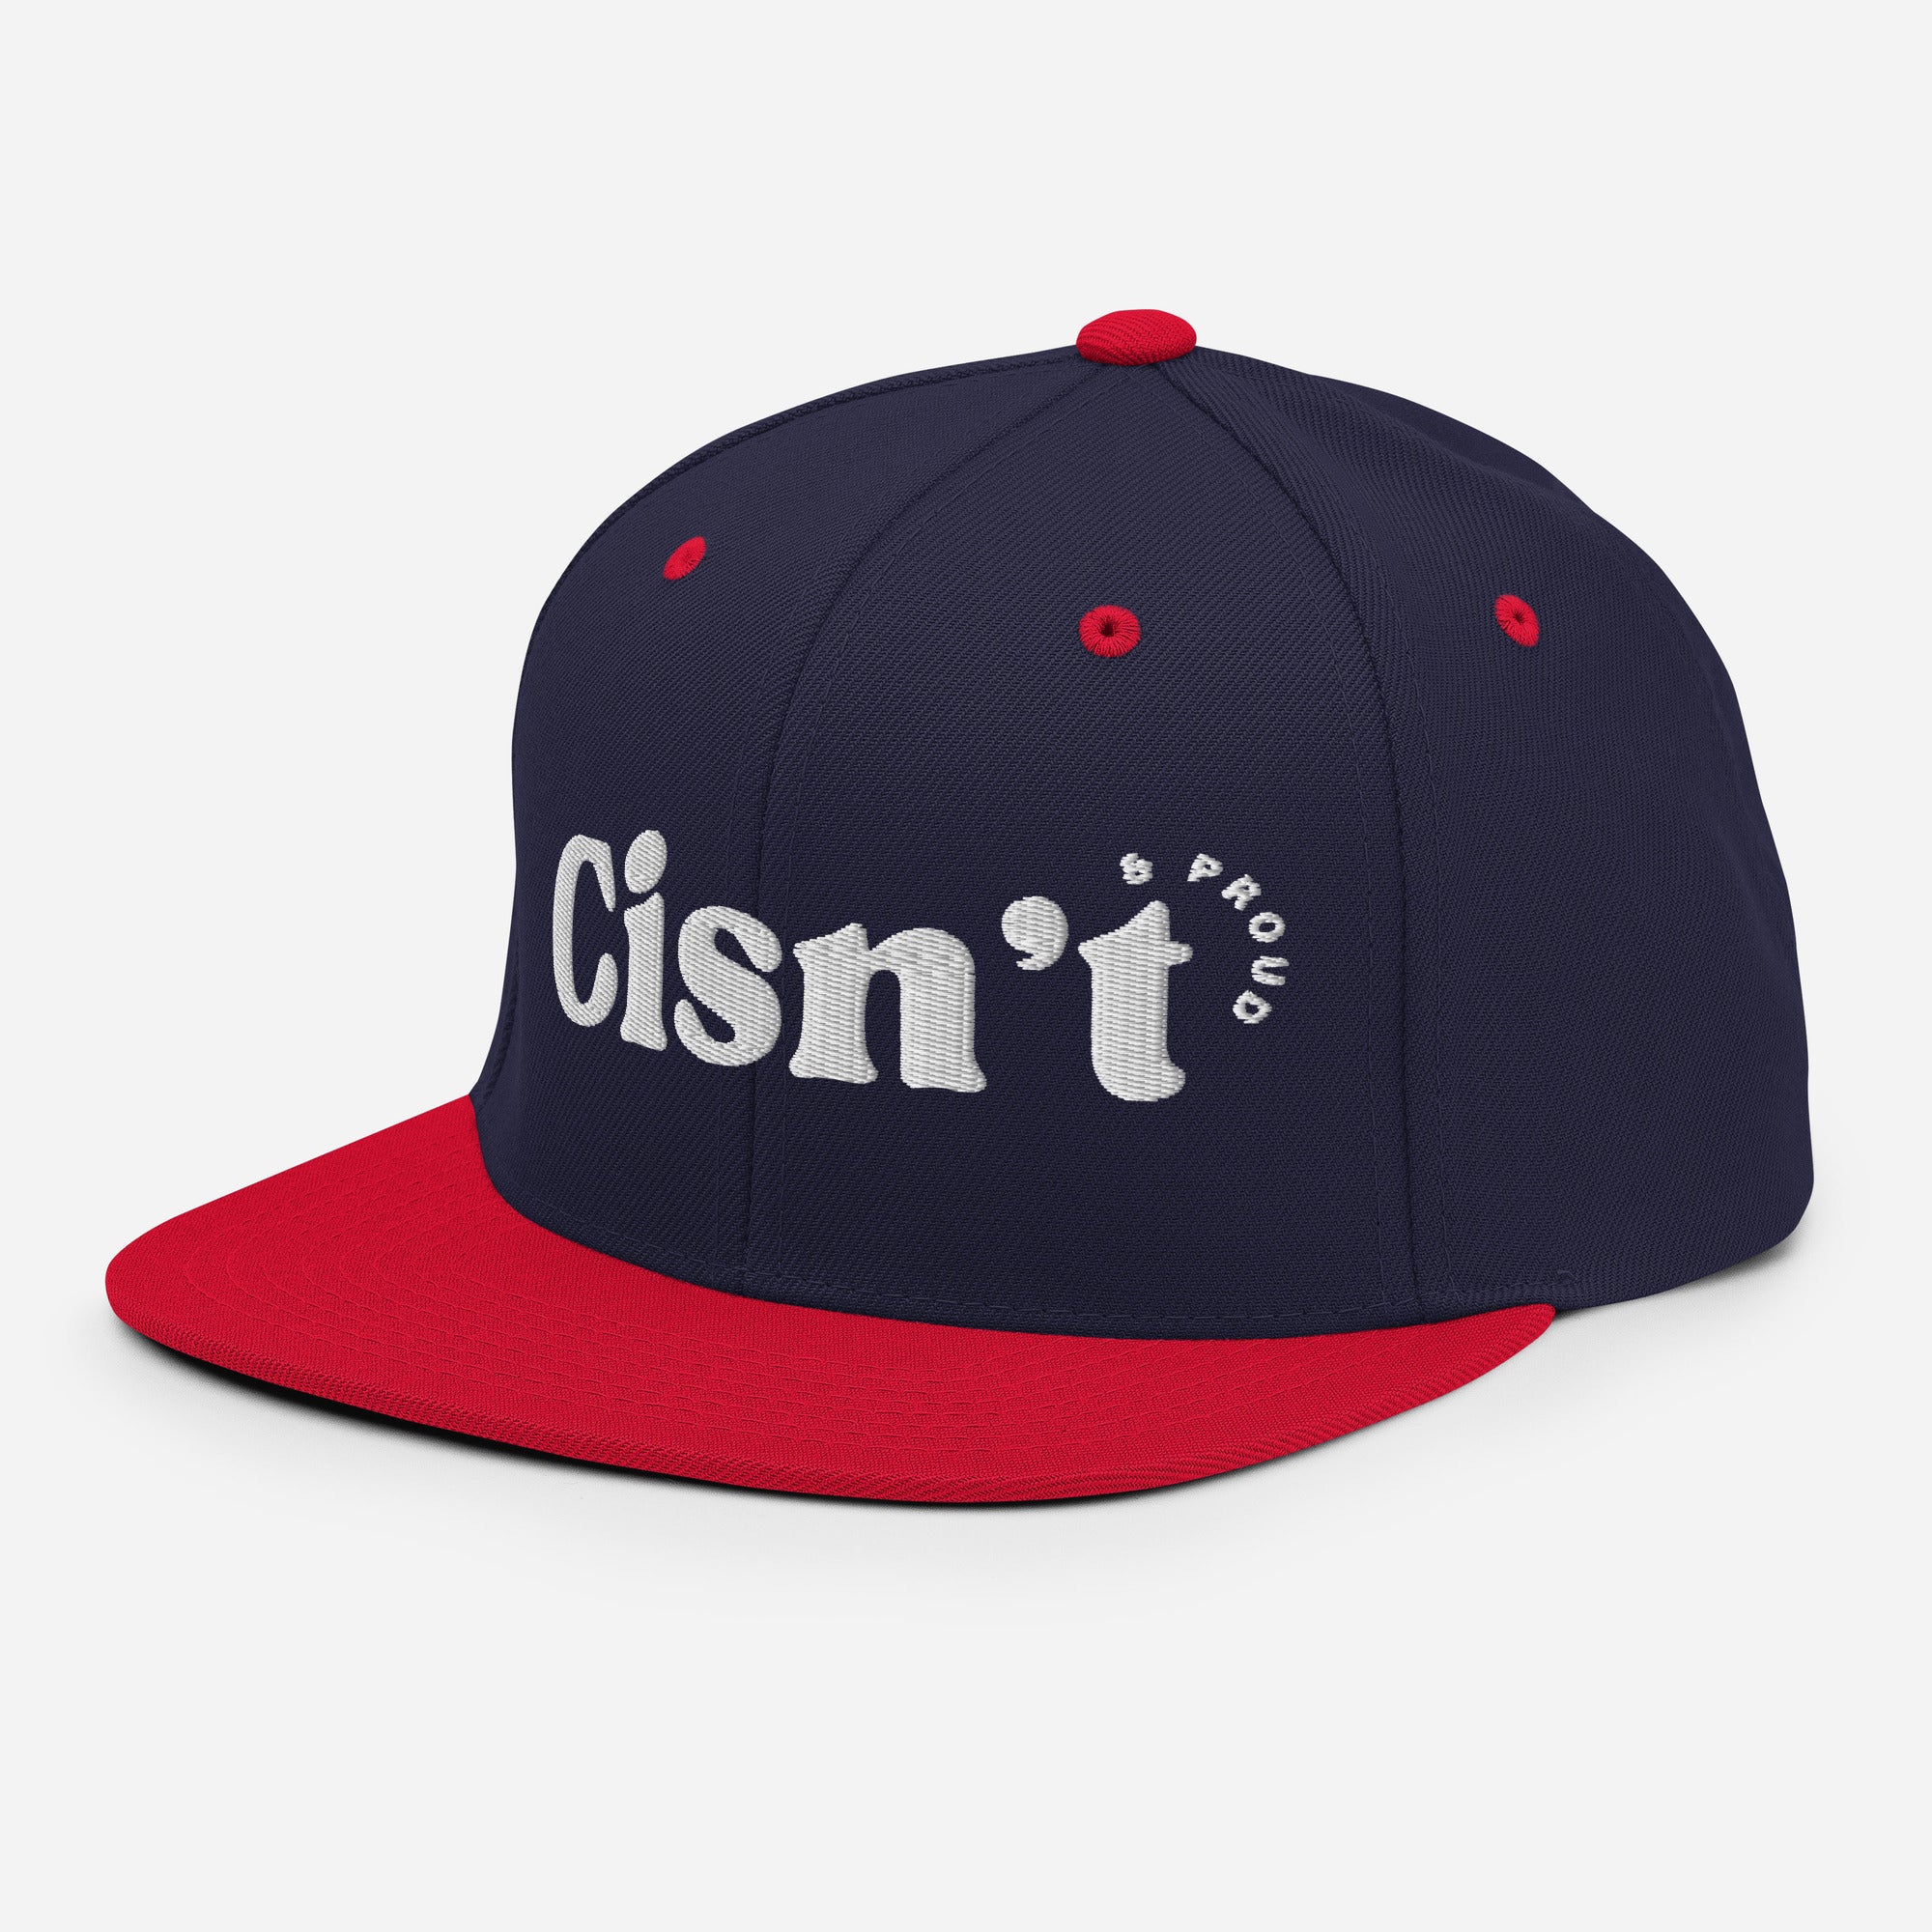 Cisn't Snapback Hat